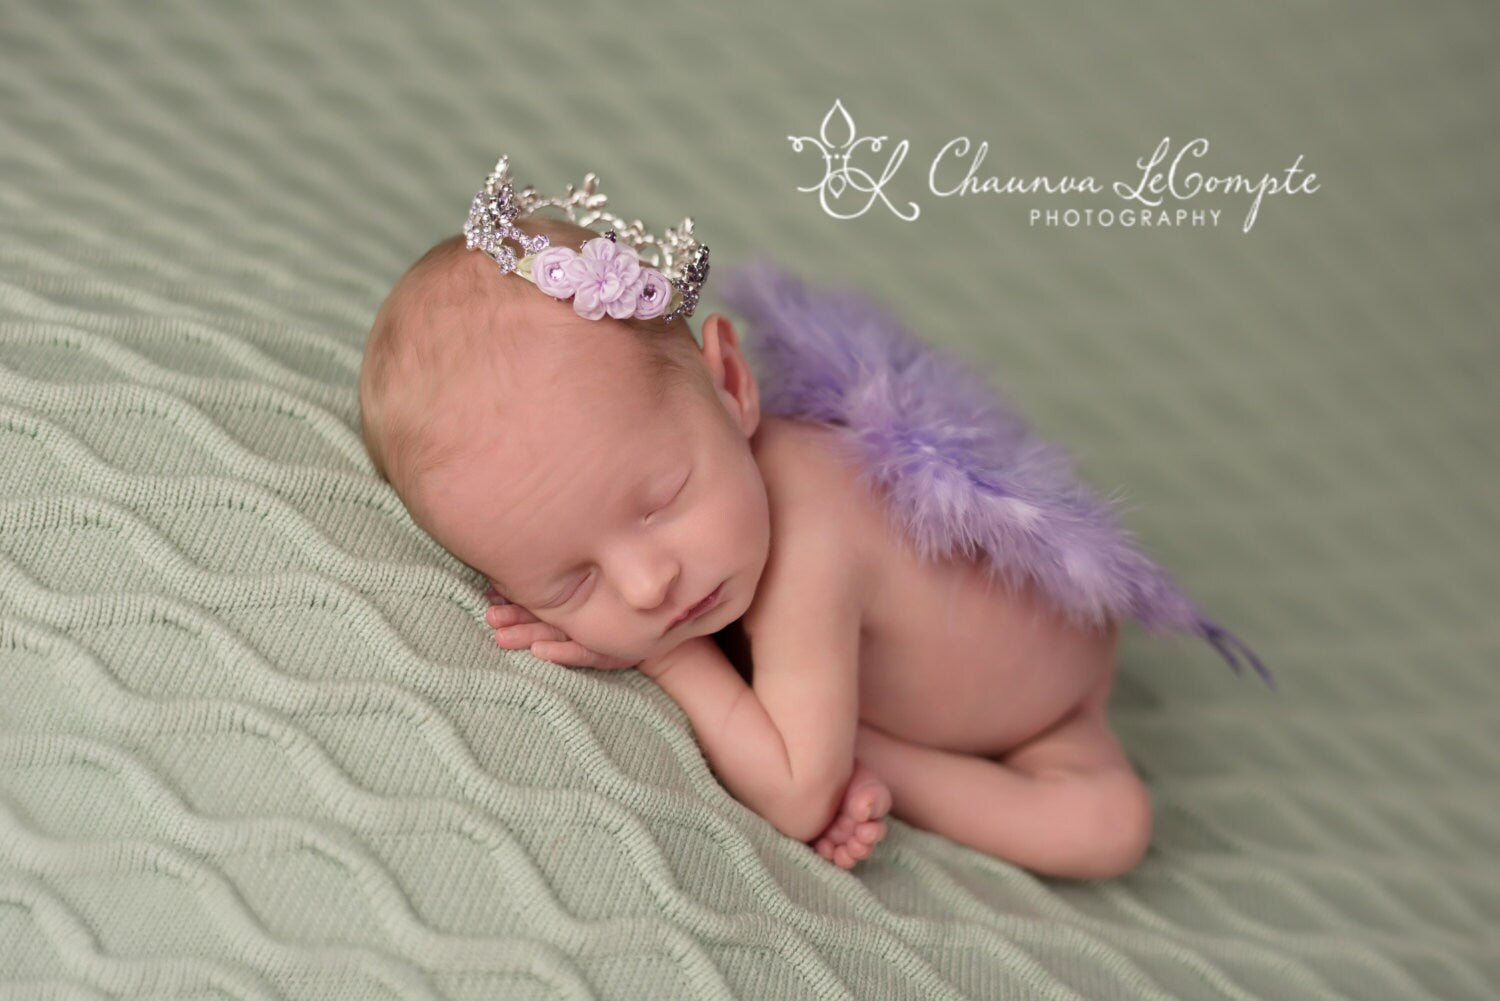 Lavender Baby Wing Set / Baby Angel Wing Set / Rhinestone Crown / Angel Wings / Newborn Photo Prop / Newborn Wing / Newborn Angel Costume